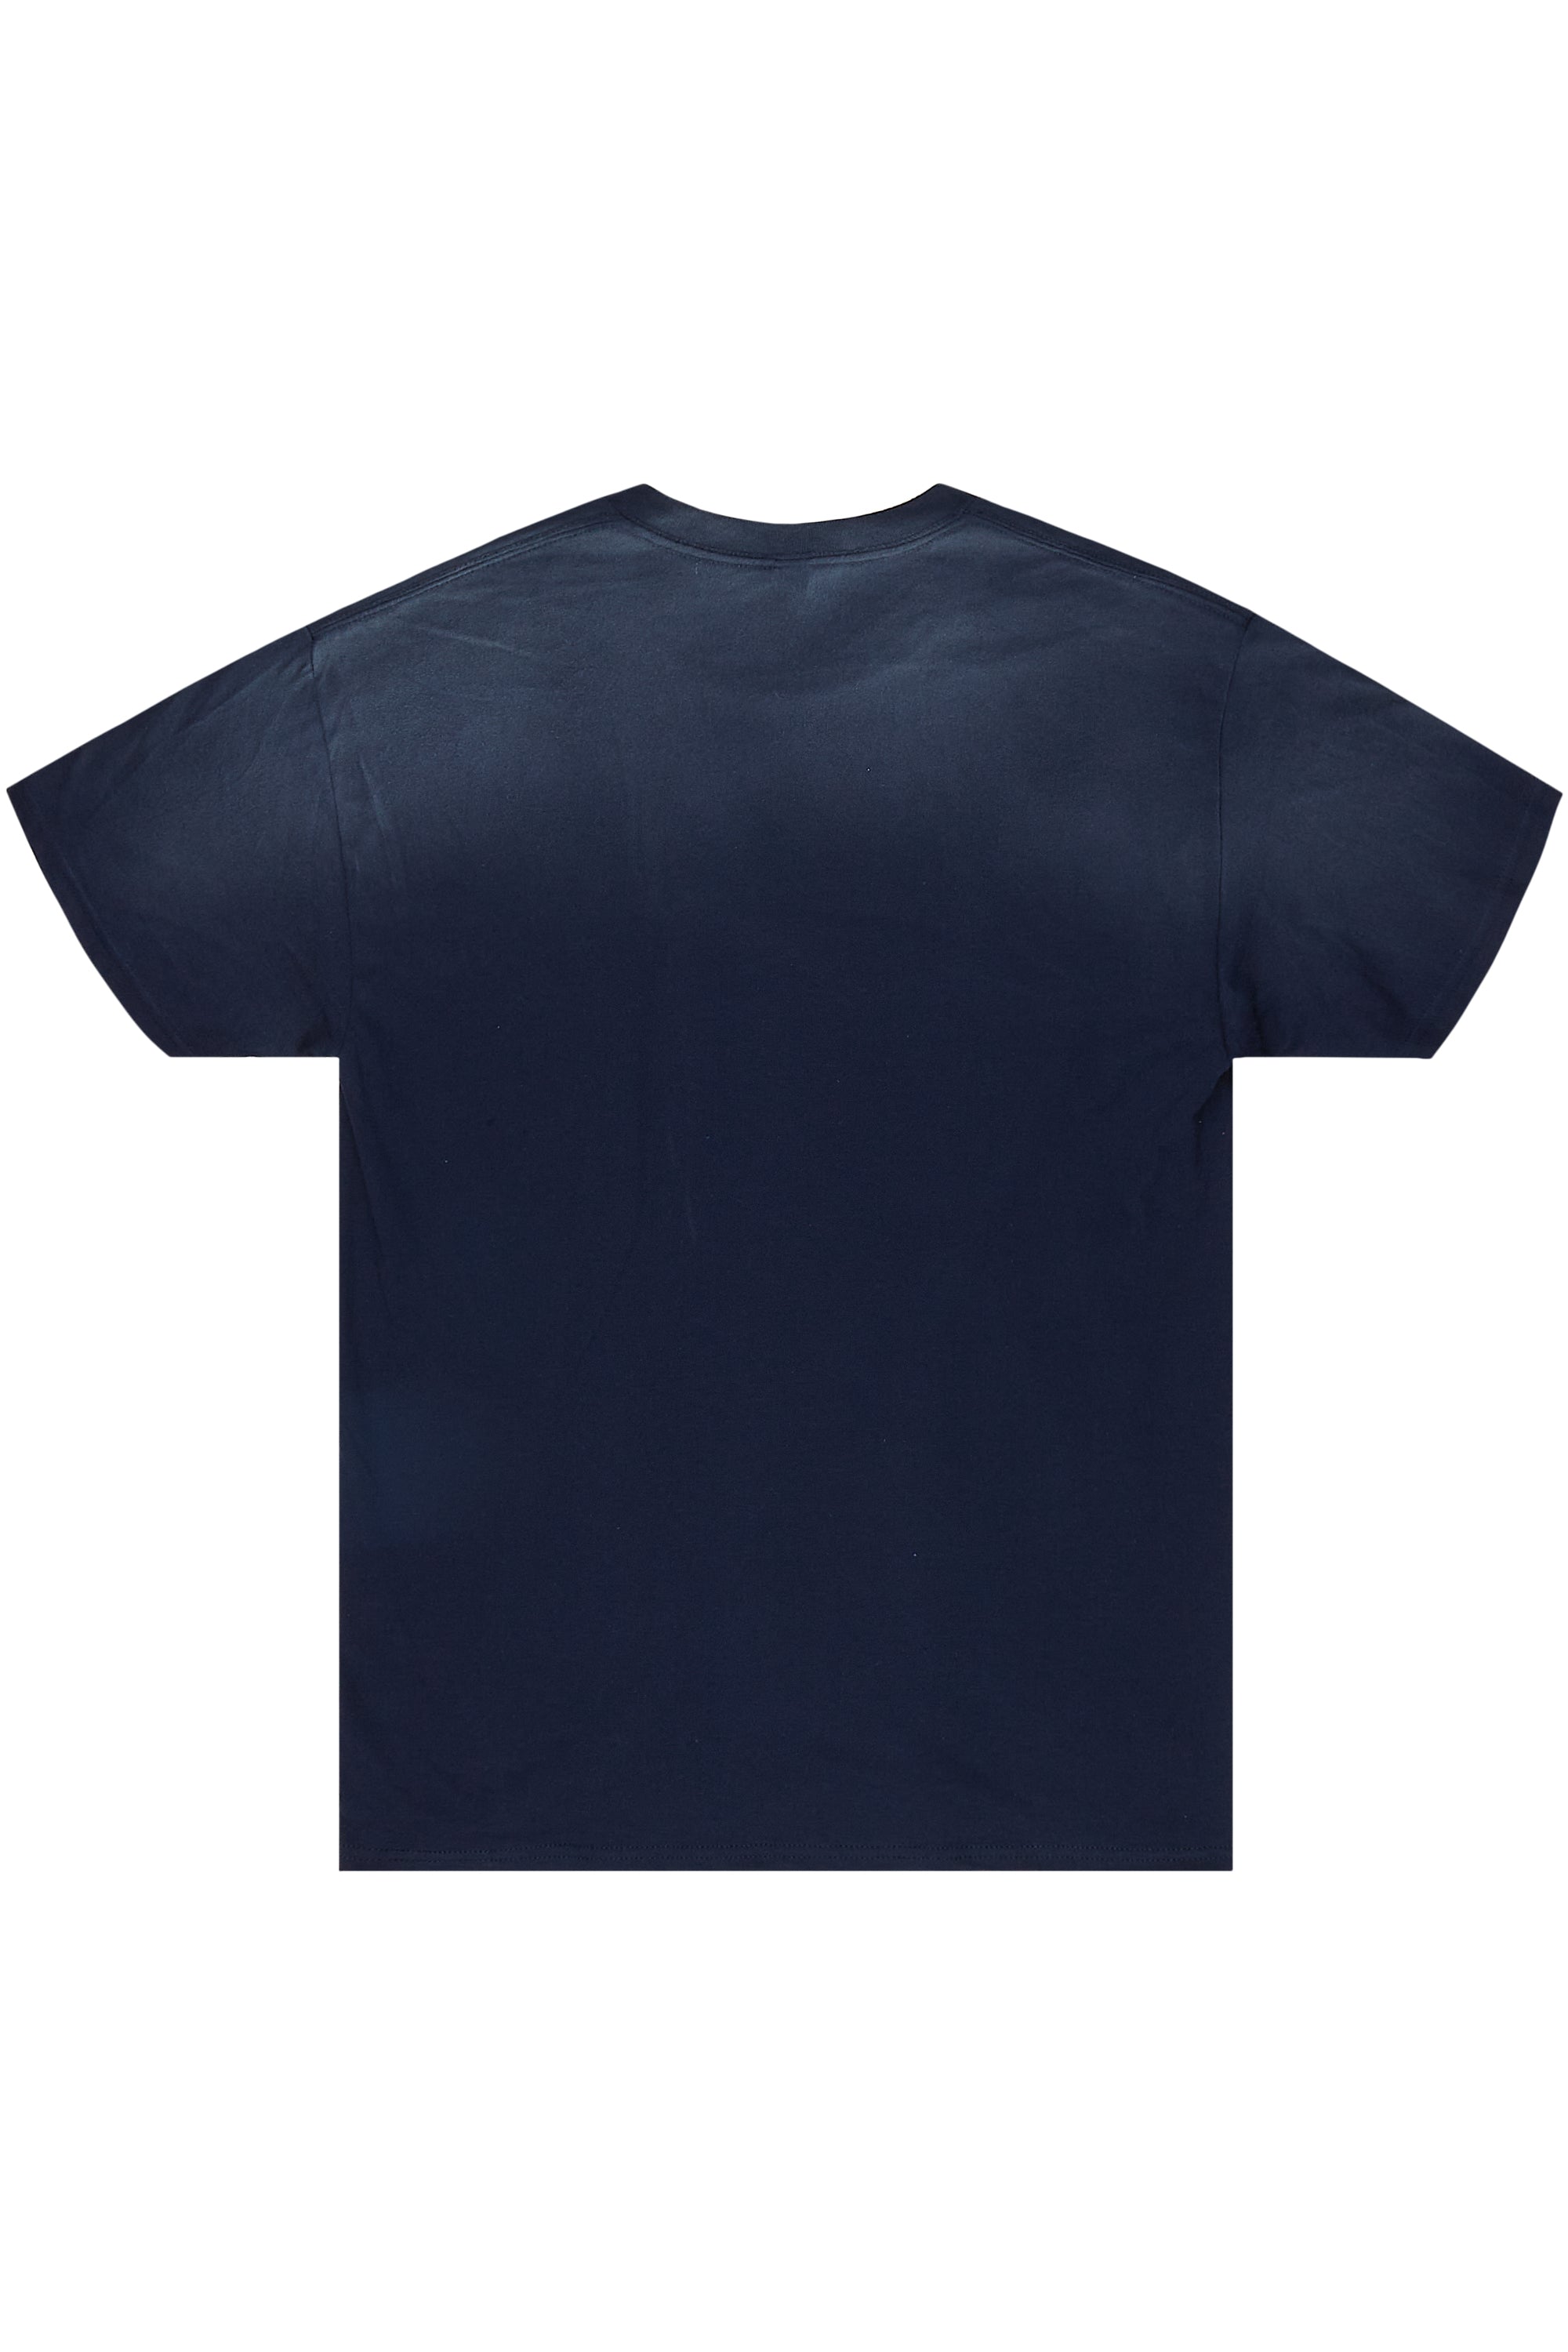 Palmer Navy Graphic T-Shirt– Rockstar Original